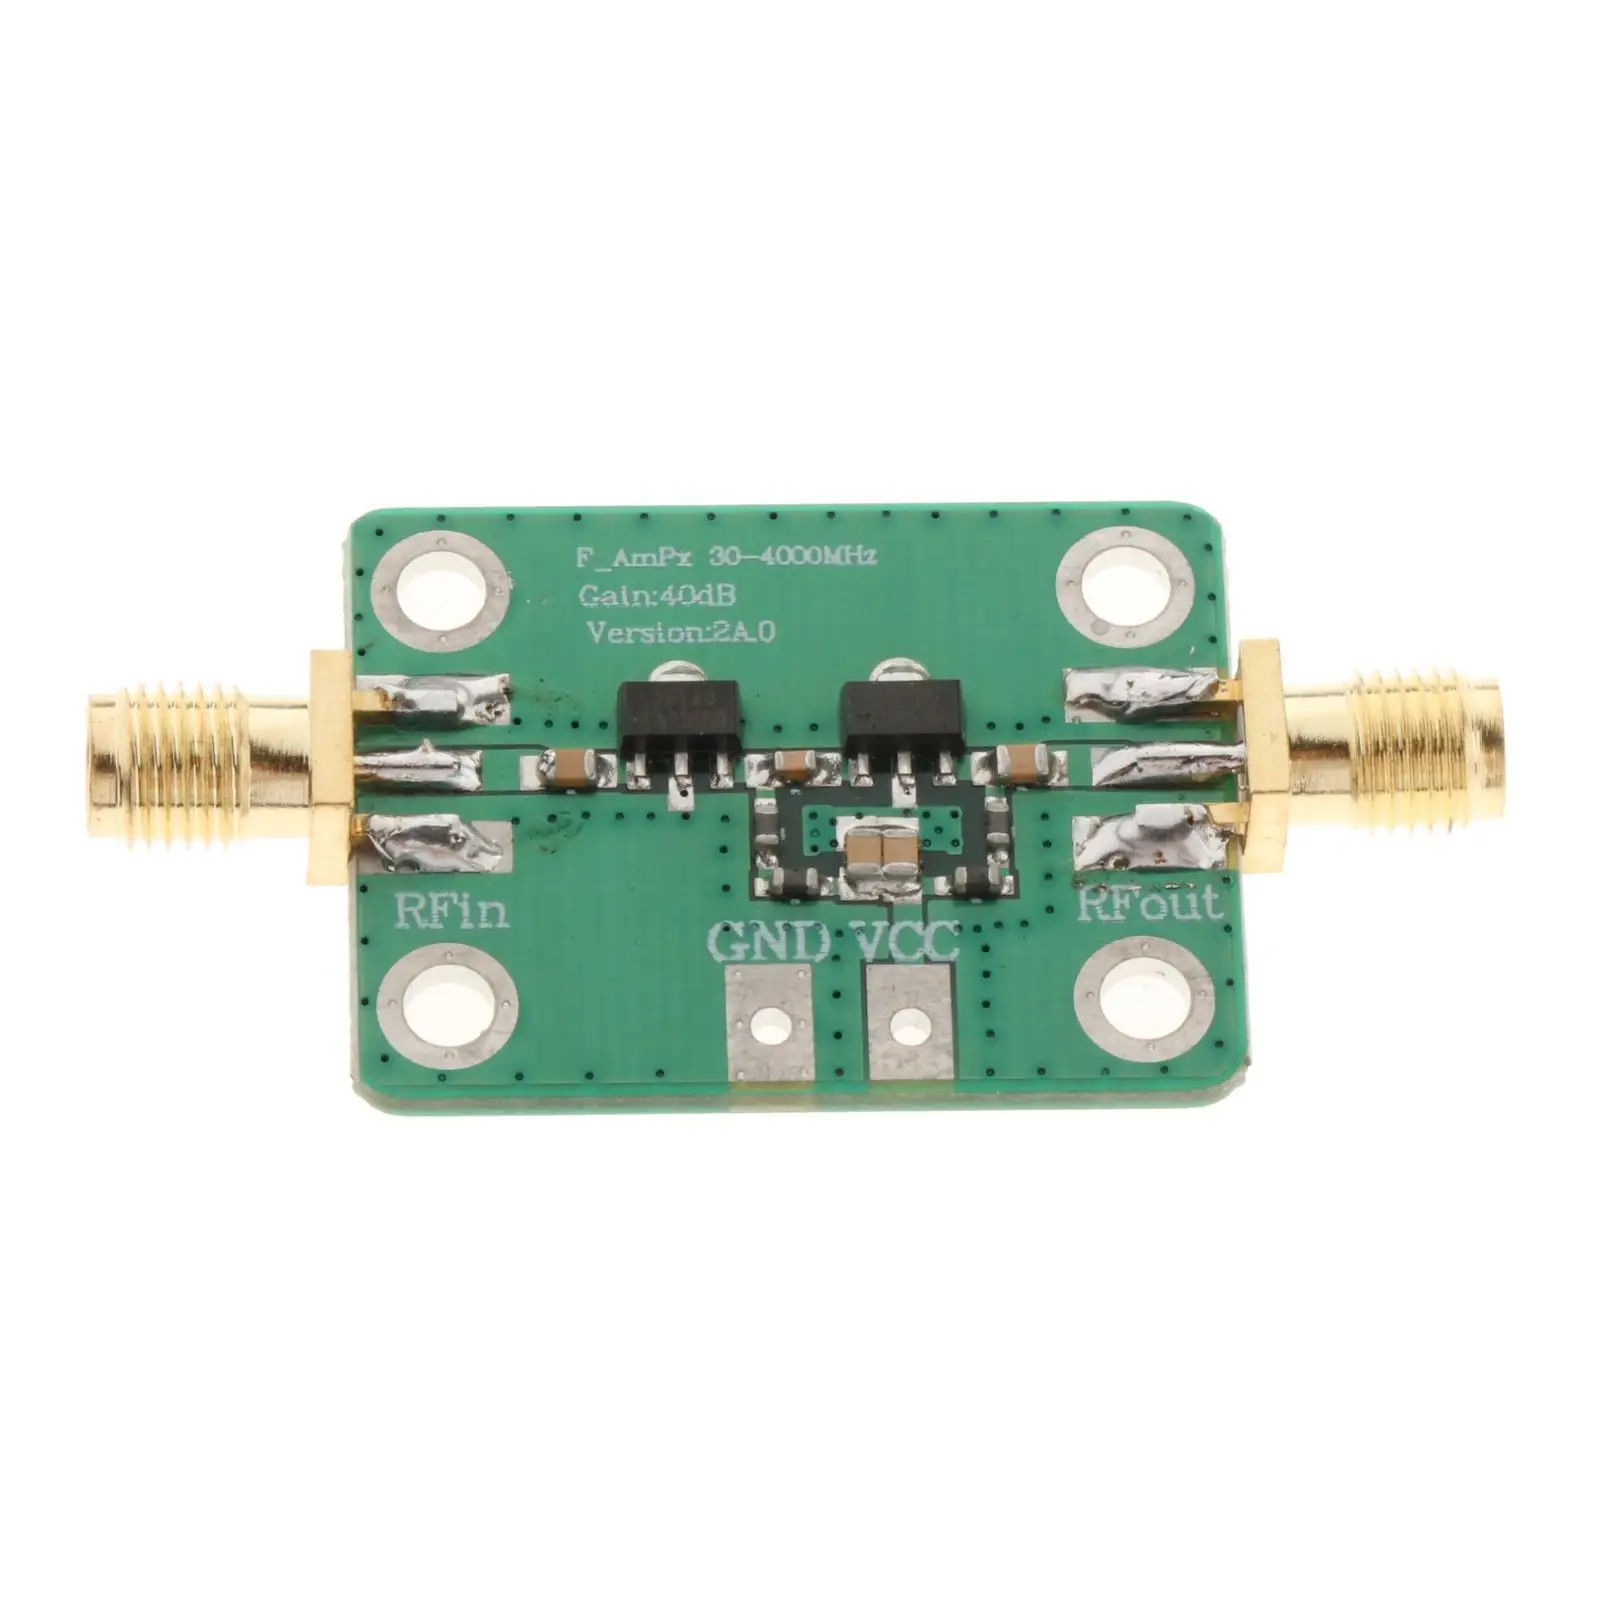 DC5V, 30-4000MHz RF Amplifier  Module, 40dB for FM, HF VHF/UHF 50Ω Ham Radio RF Signal